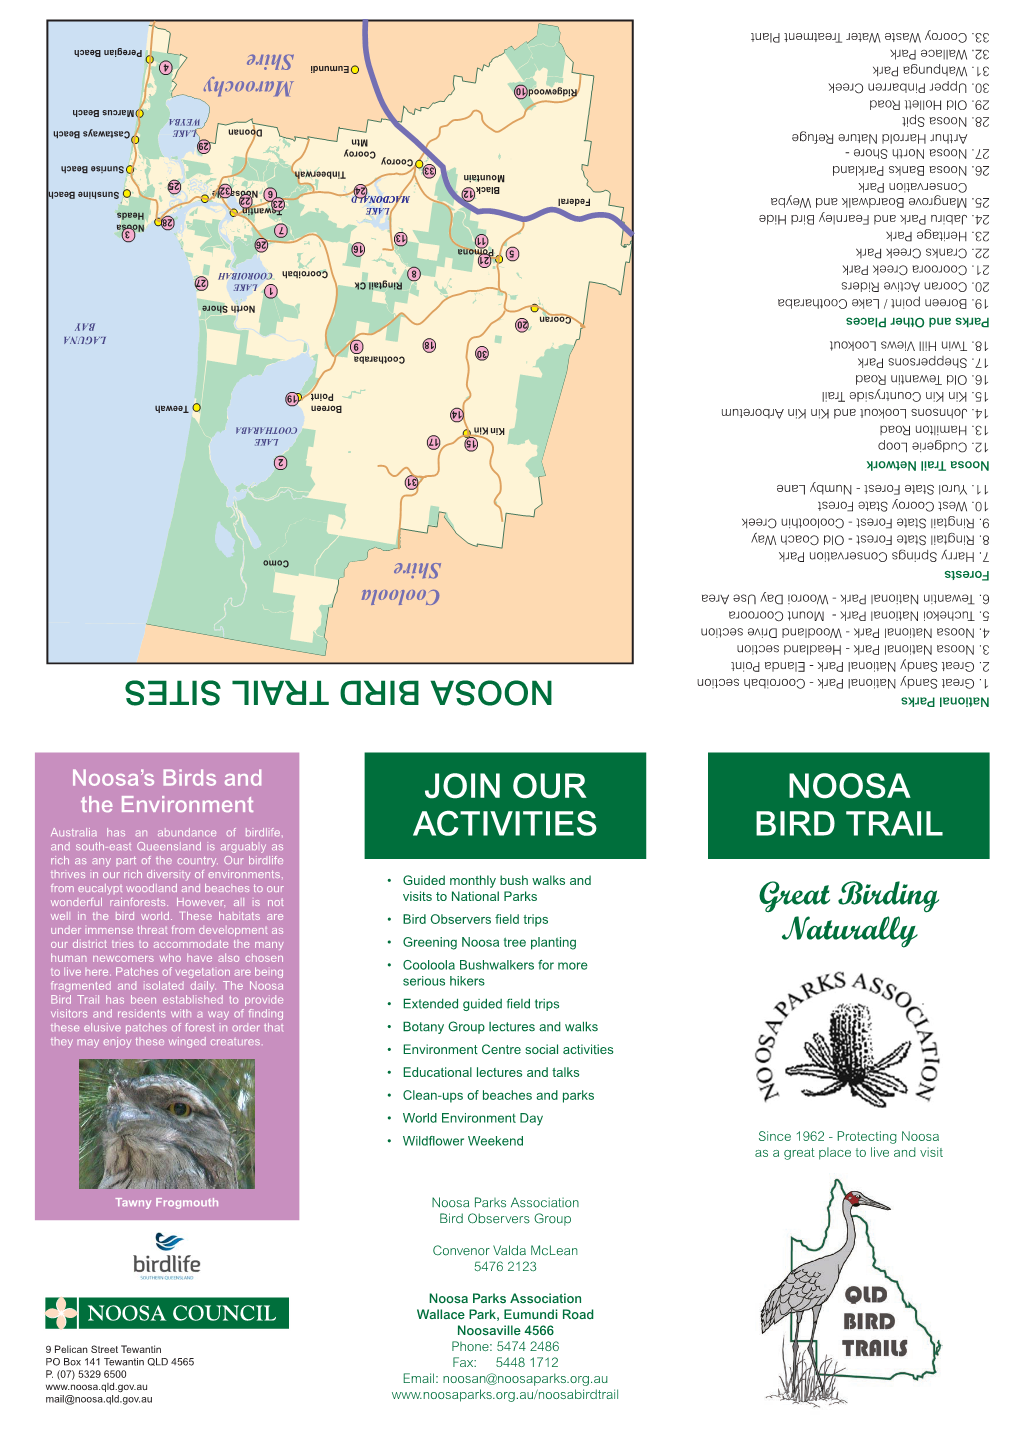 Noosa Bird Trail Join Our Activities Noosa Bird Trail Sites